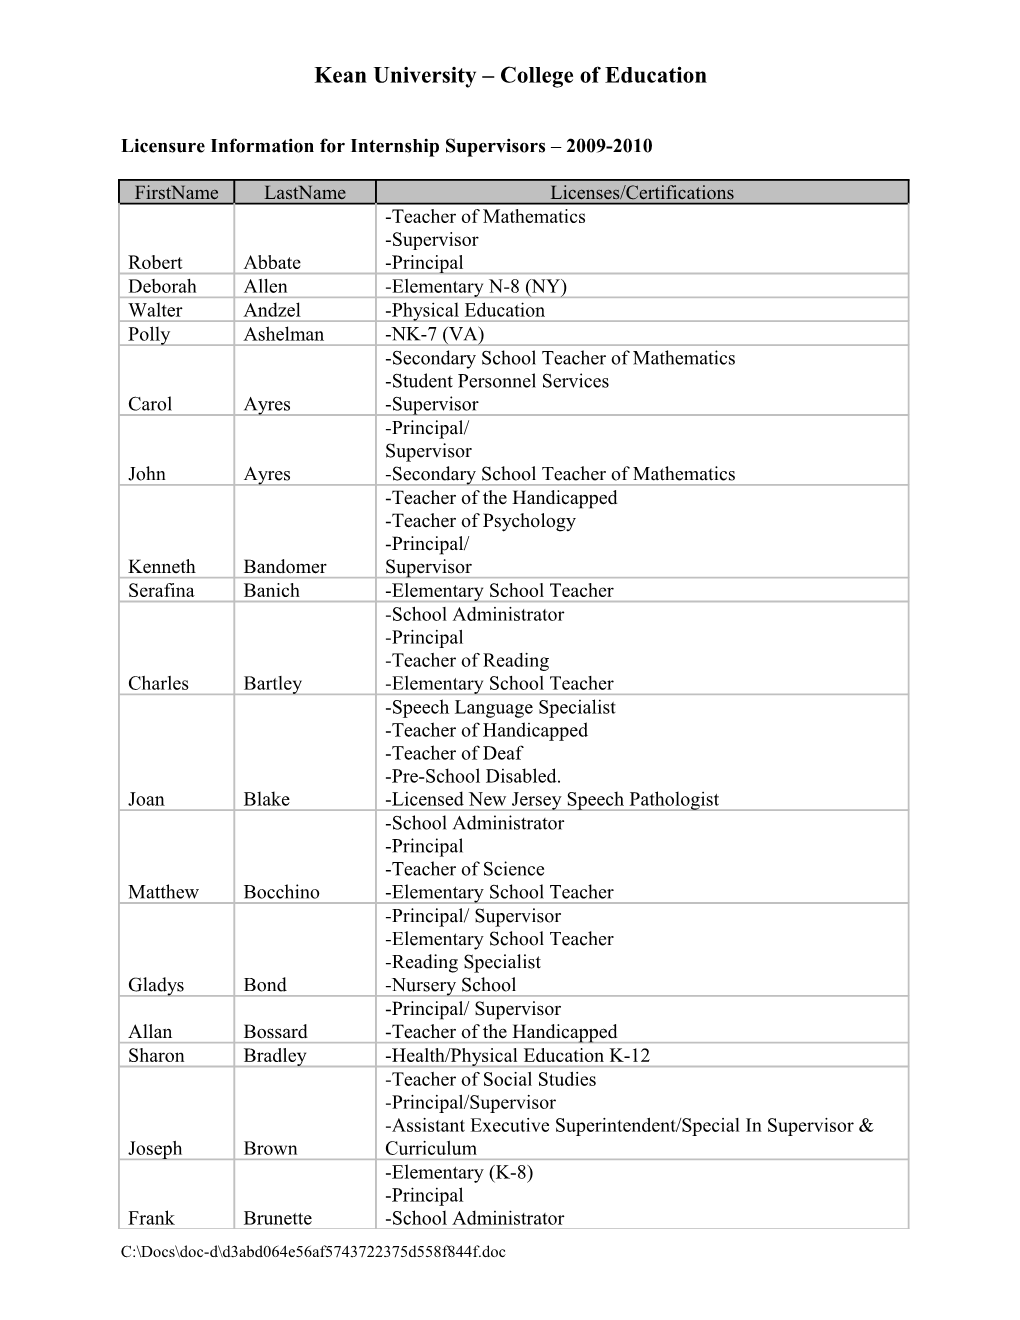 Licensure Information for Internship Supervisors - 2009